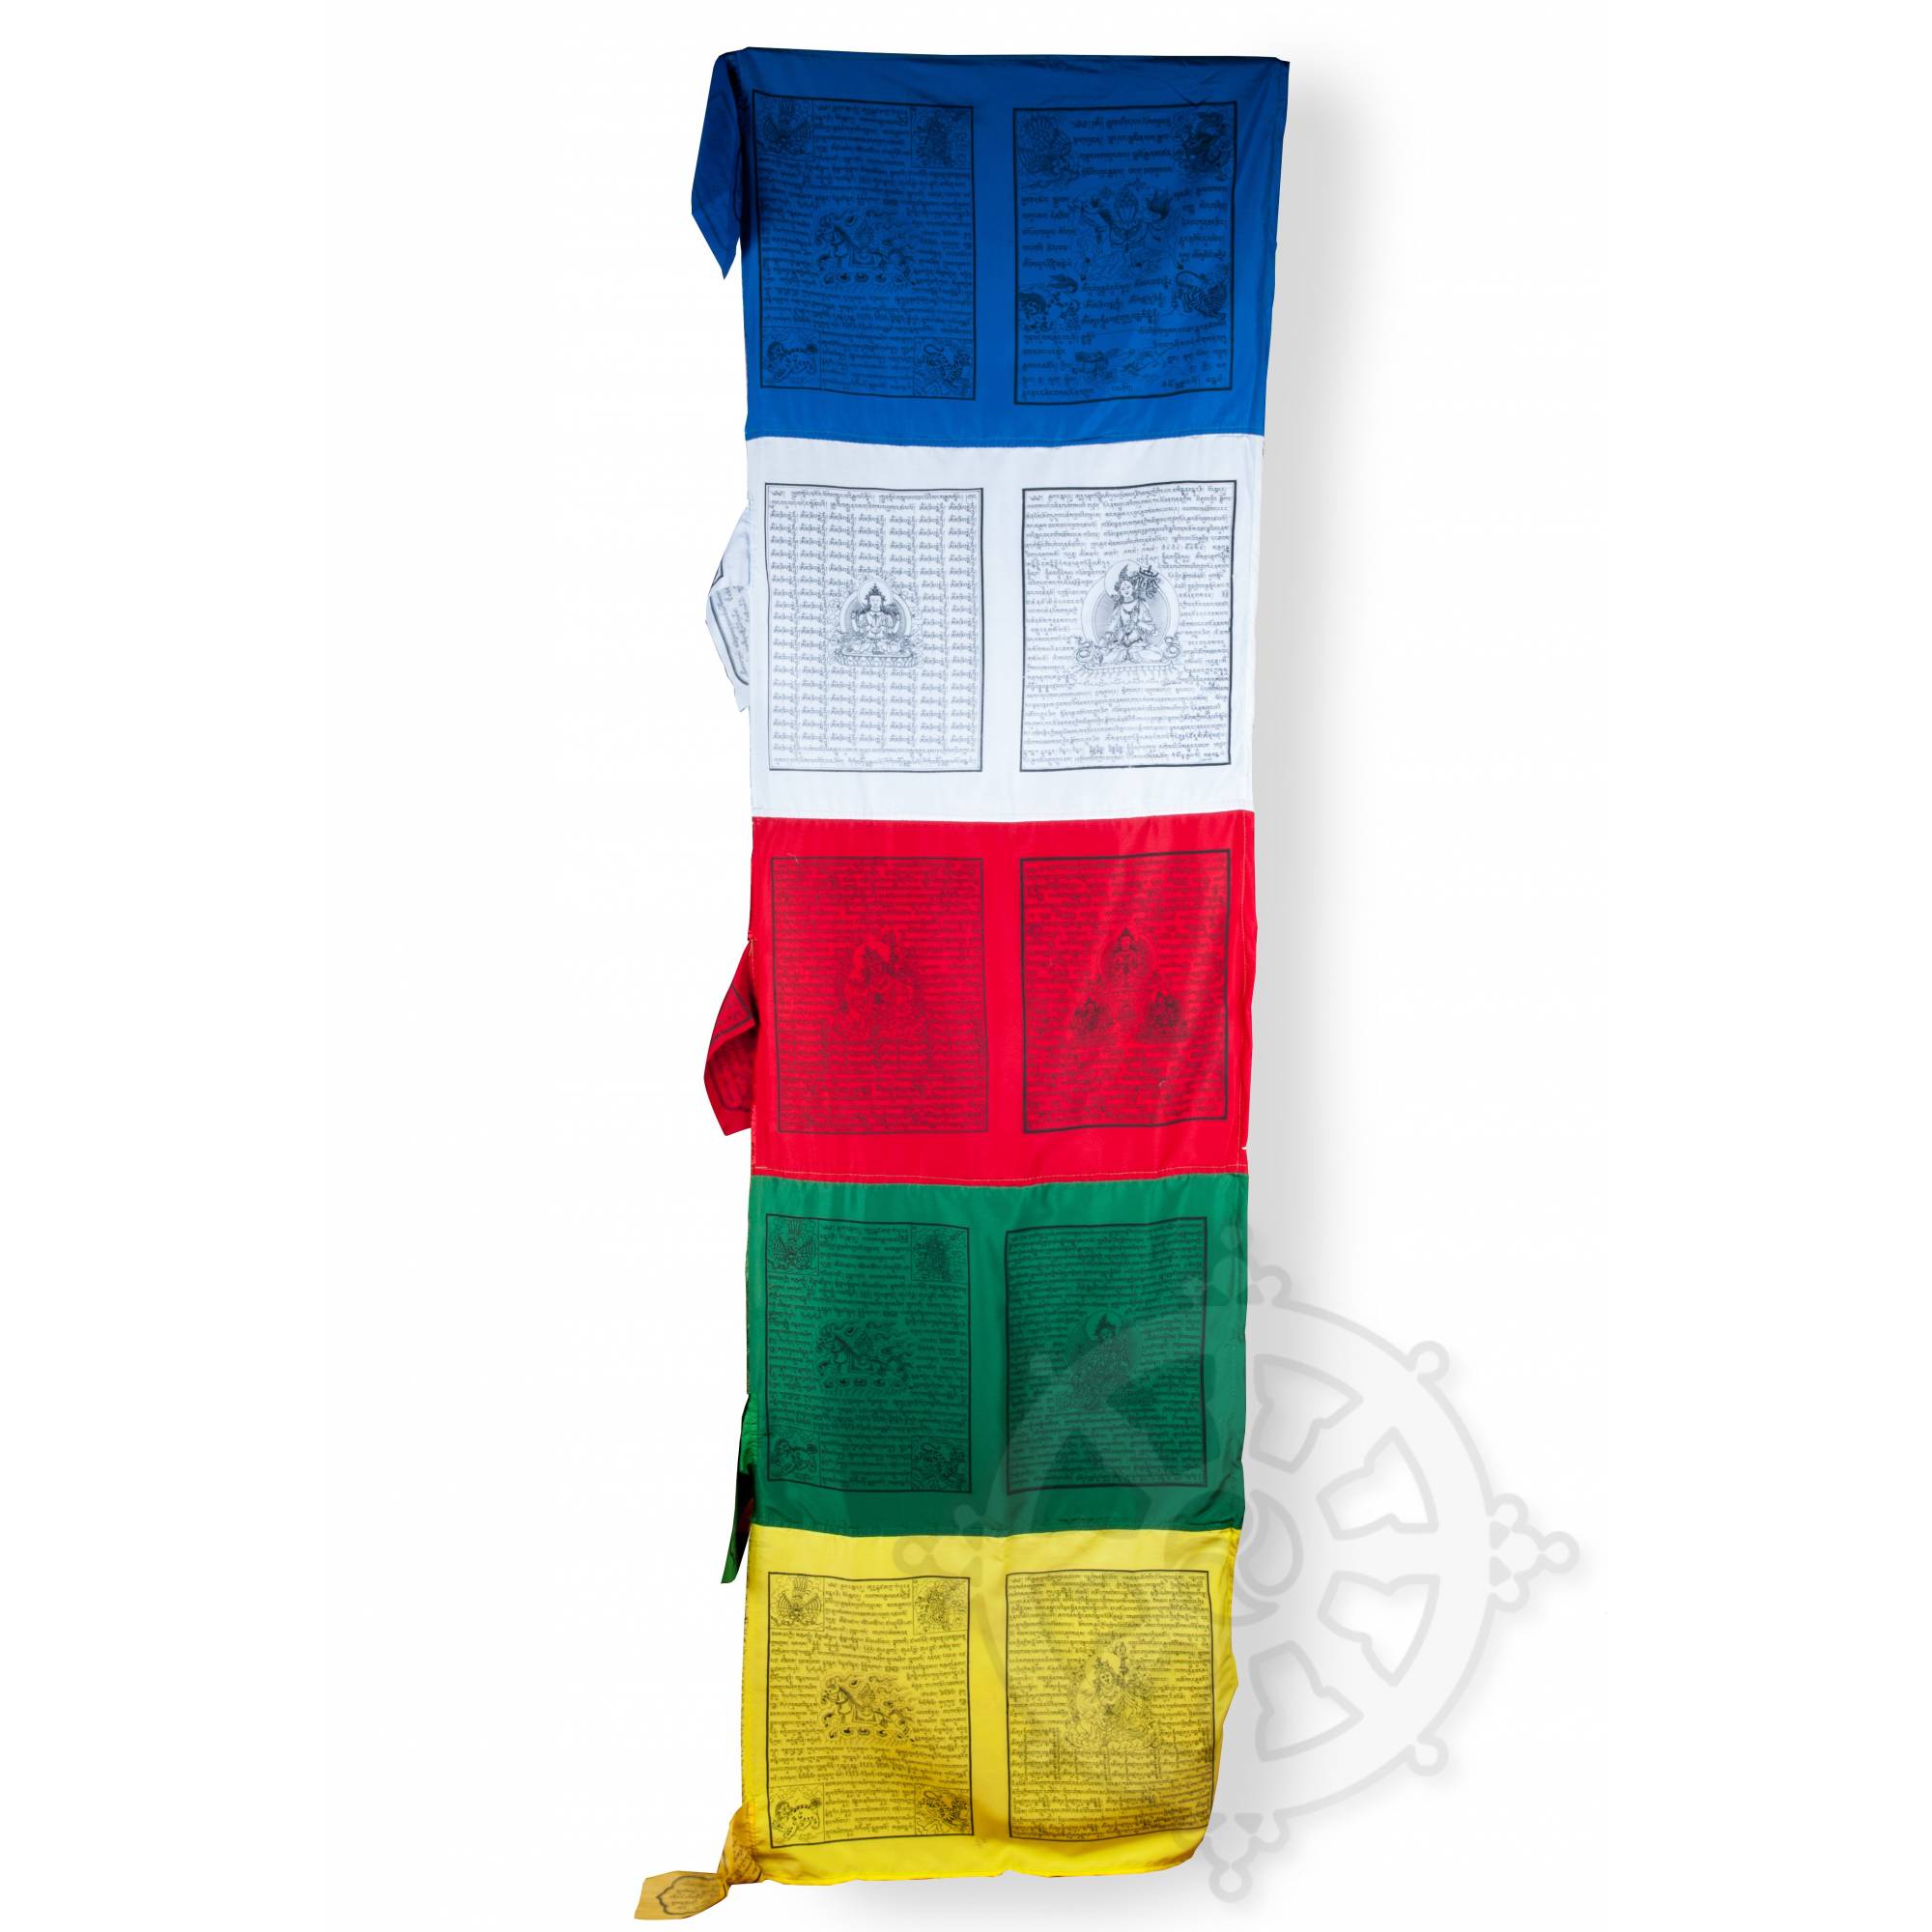 Made by Tibetan Refugees Dharma Store Pack of 50 Tibetan Buddhist Prayer Flags